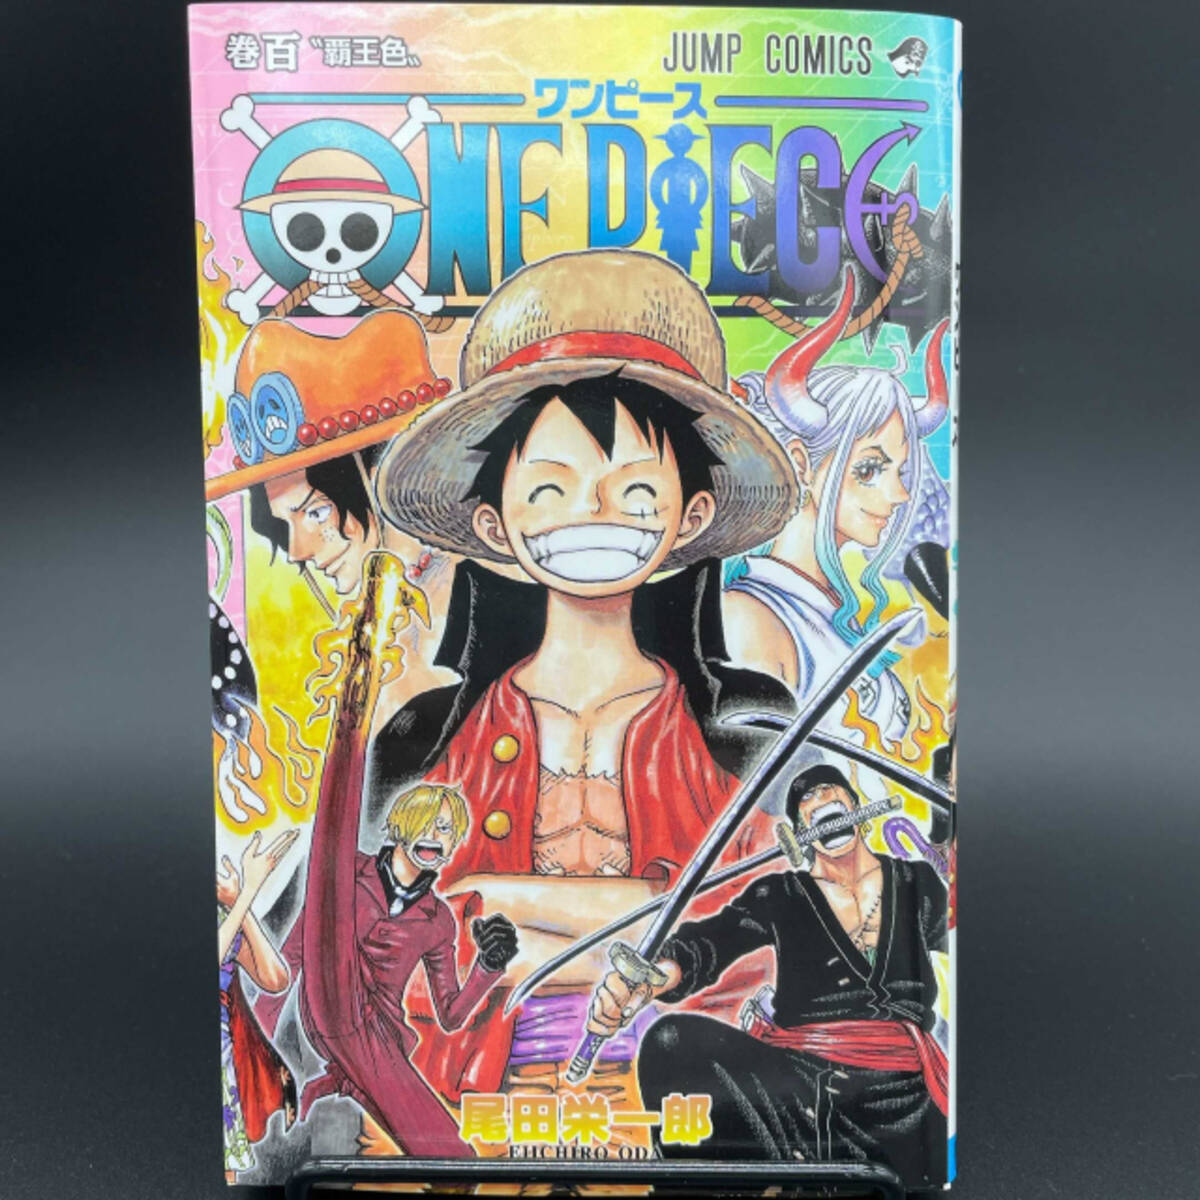 One Piece ヤマトとサンジの過去がソックリ 2人に共通する 毒親問題 21年9月15日 エキサイトニュース